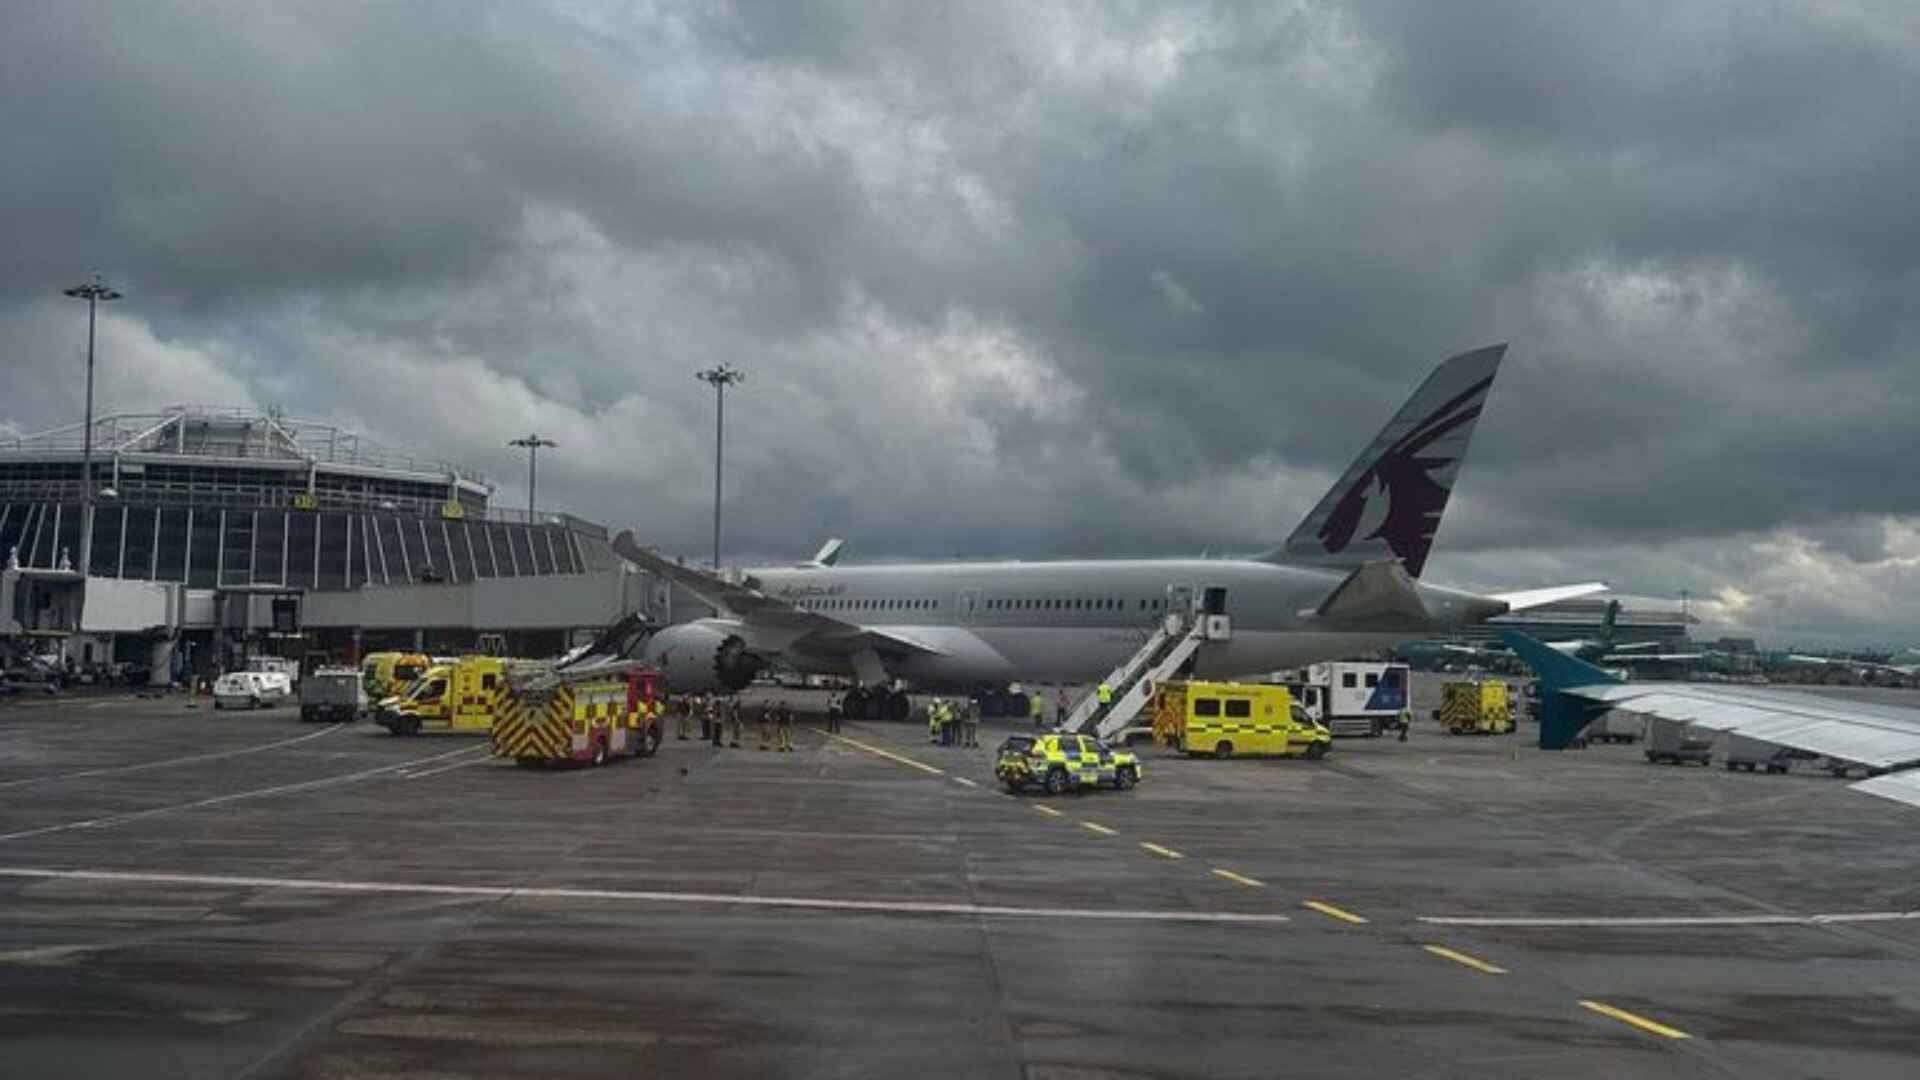 Qatar Airways Flight To Dublin Experiences Turbulence, Injuring 12 Passengers